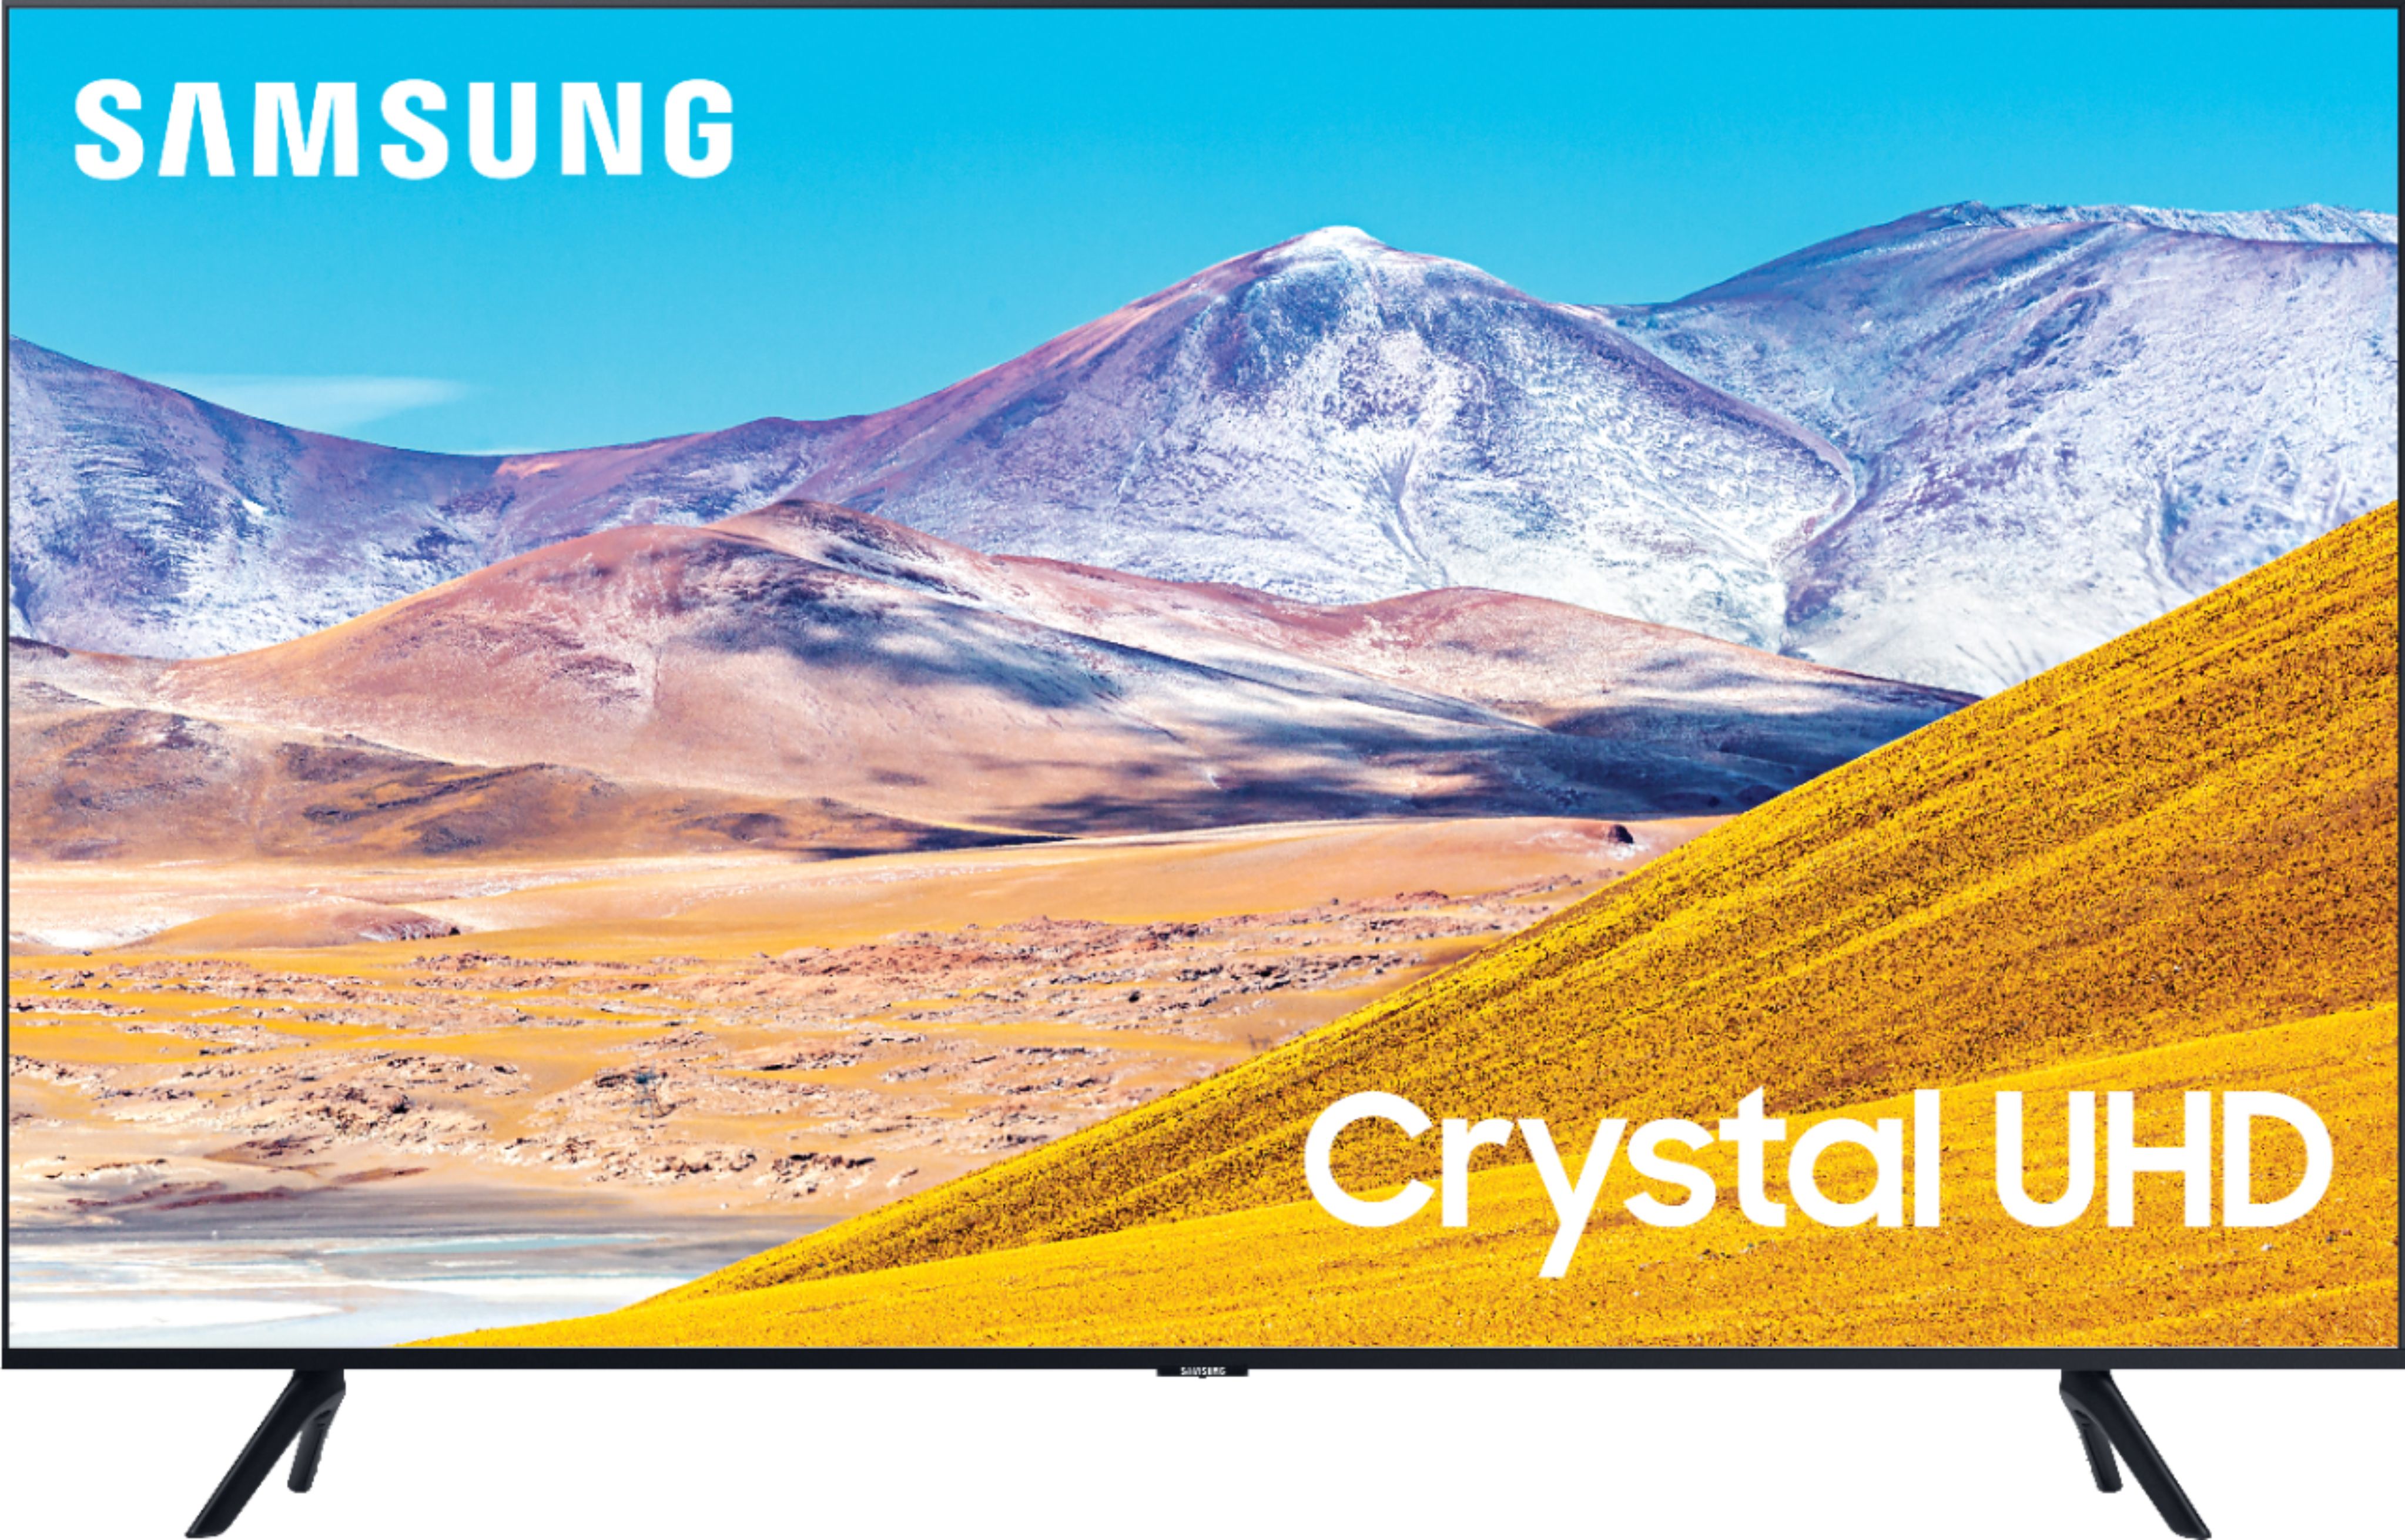 Samsung 85" Class 8 Series LED 4K UHD Smart Tizen TV UN85TU8000FXZA - Buy